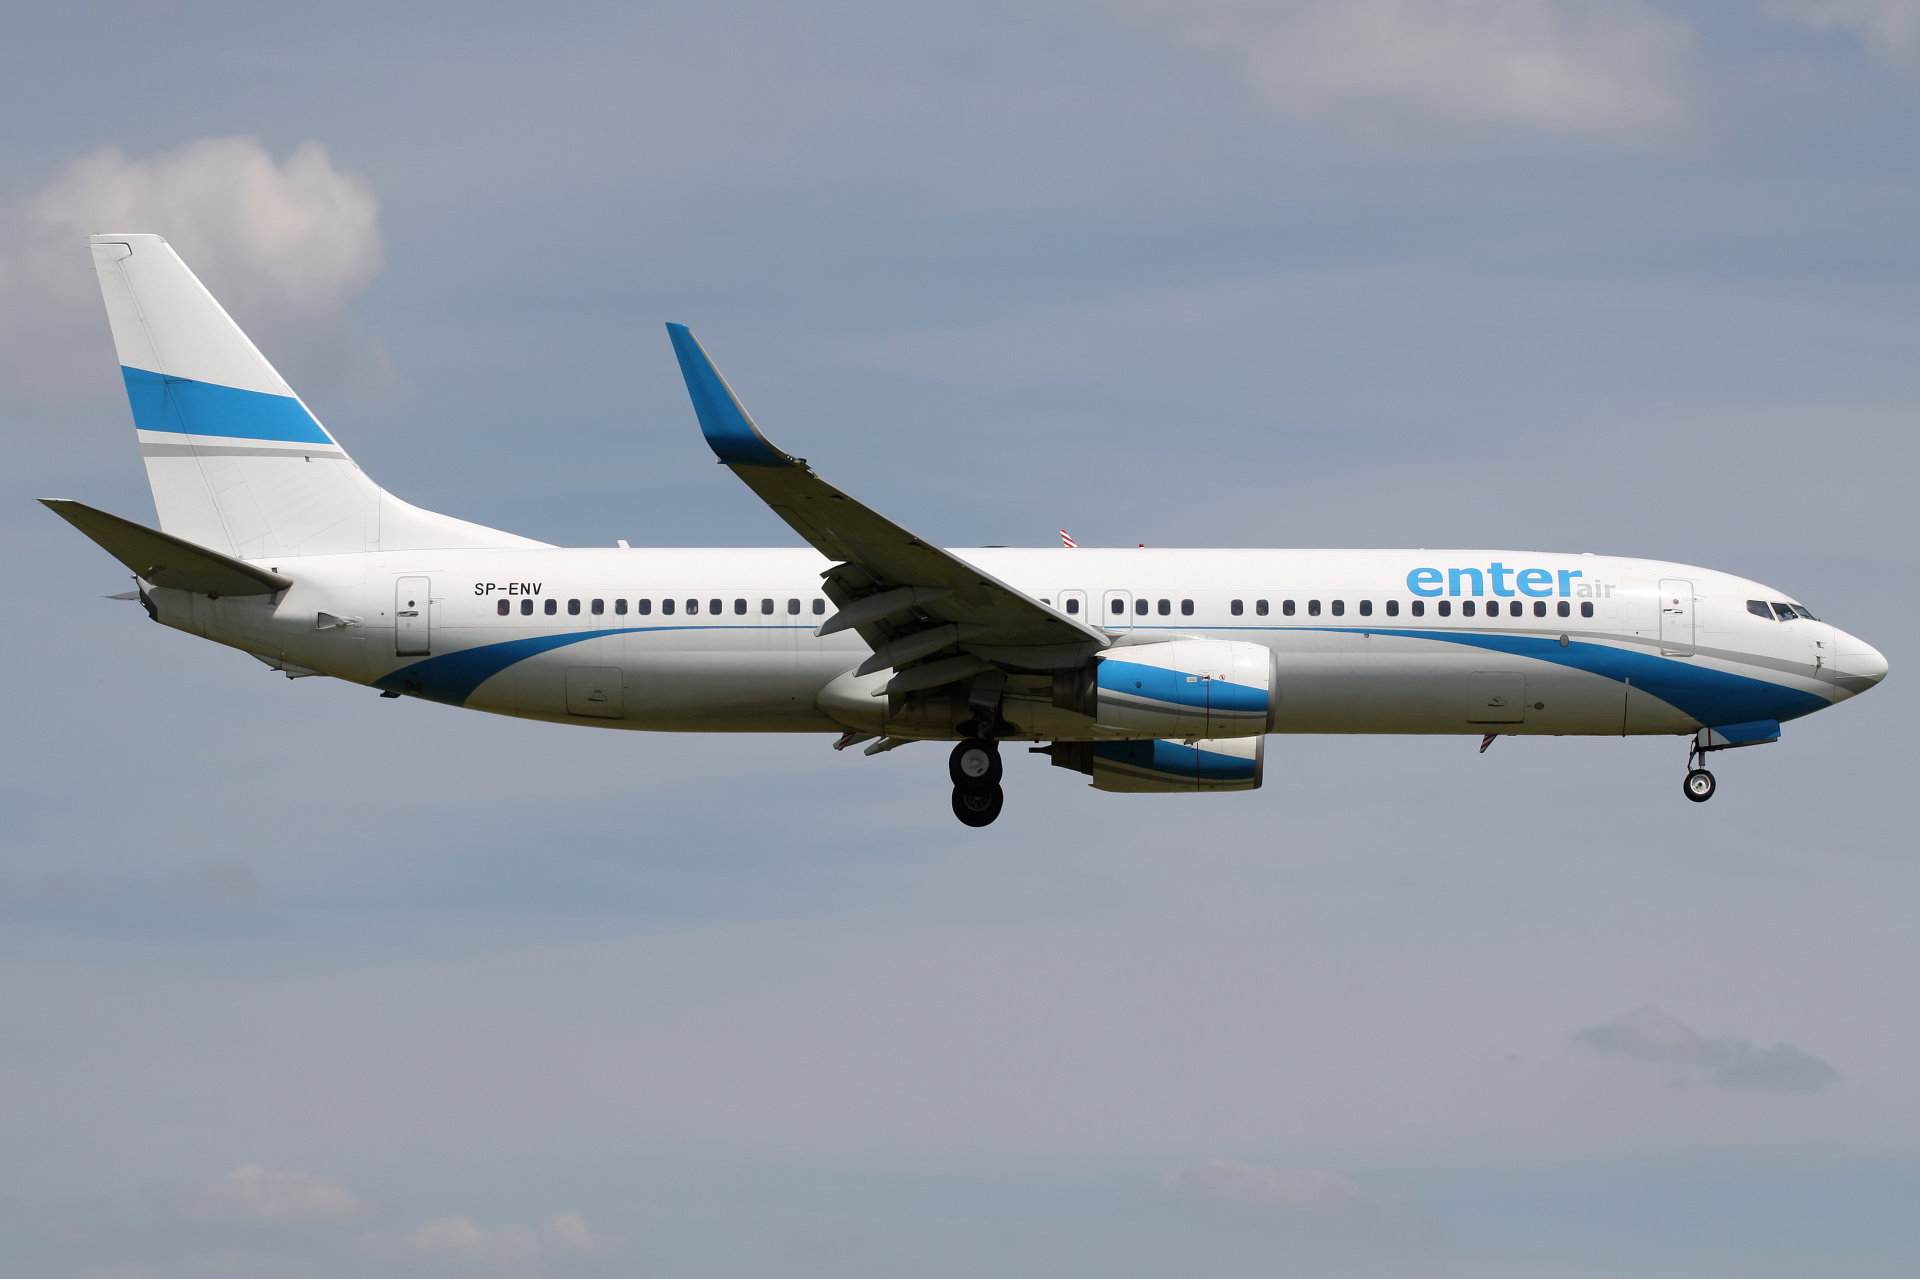 SP-ENV (Aircraft » EPWA Spotting » Boeing 737-800 » Enter Air)